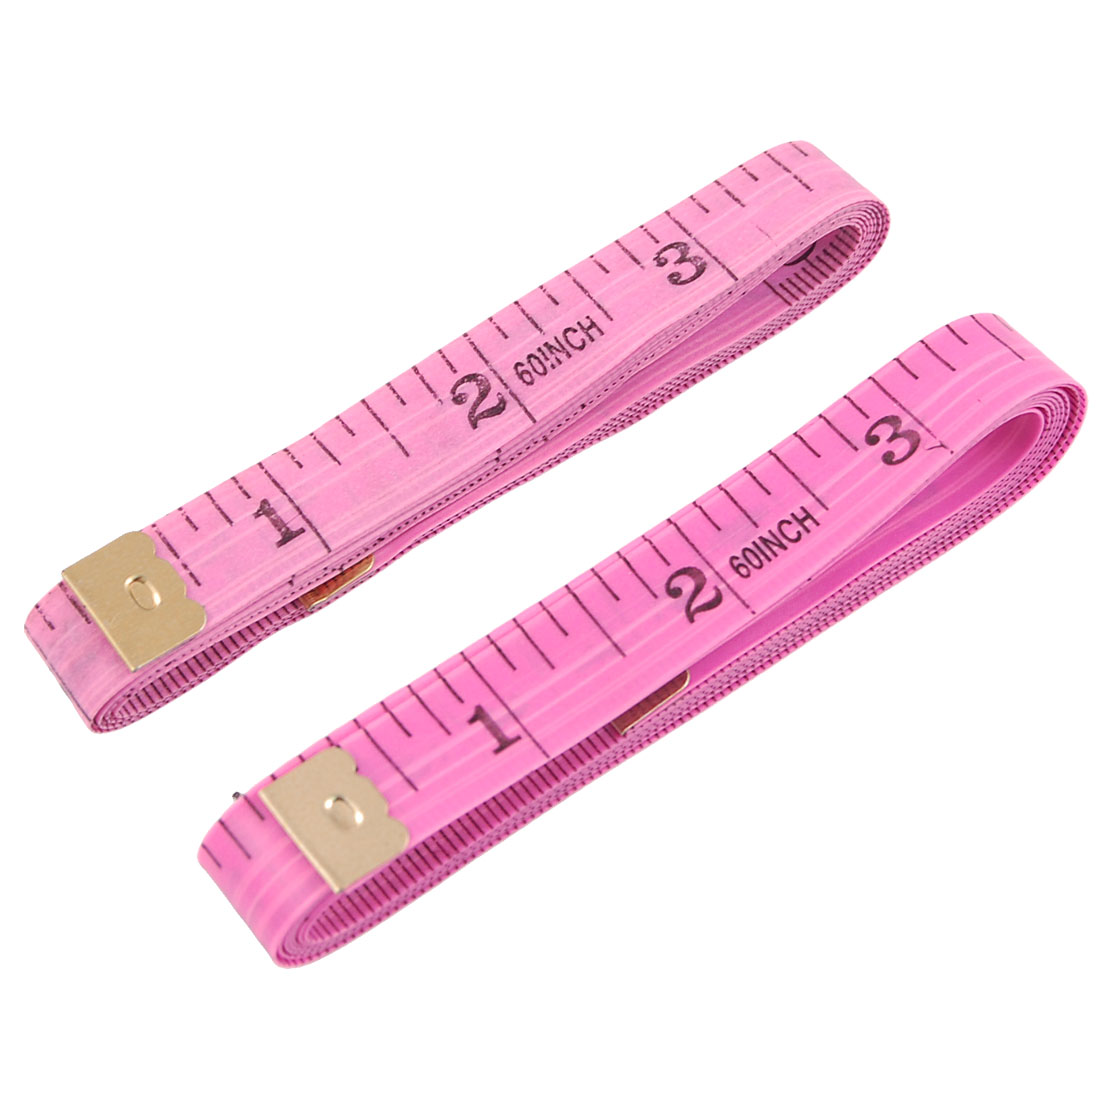 2 Pcs Sewing Tailor Seamstress Flexible Ruler Tape Measure Pink 1.5